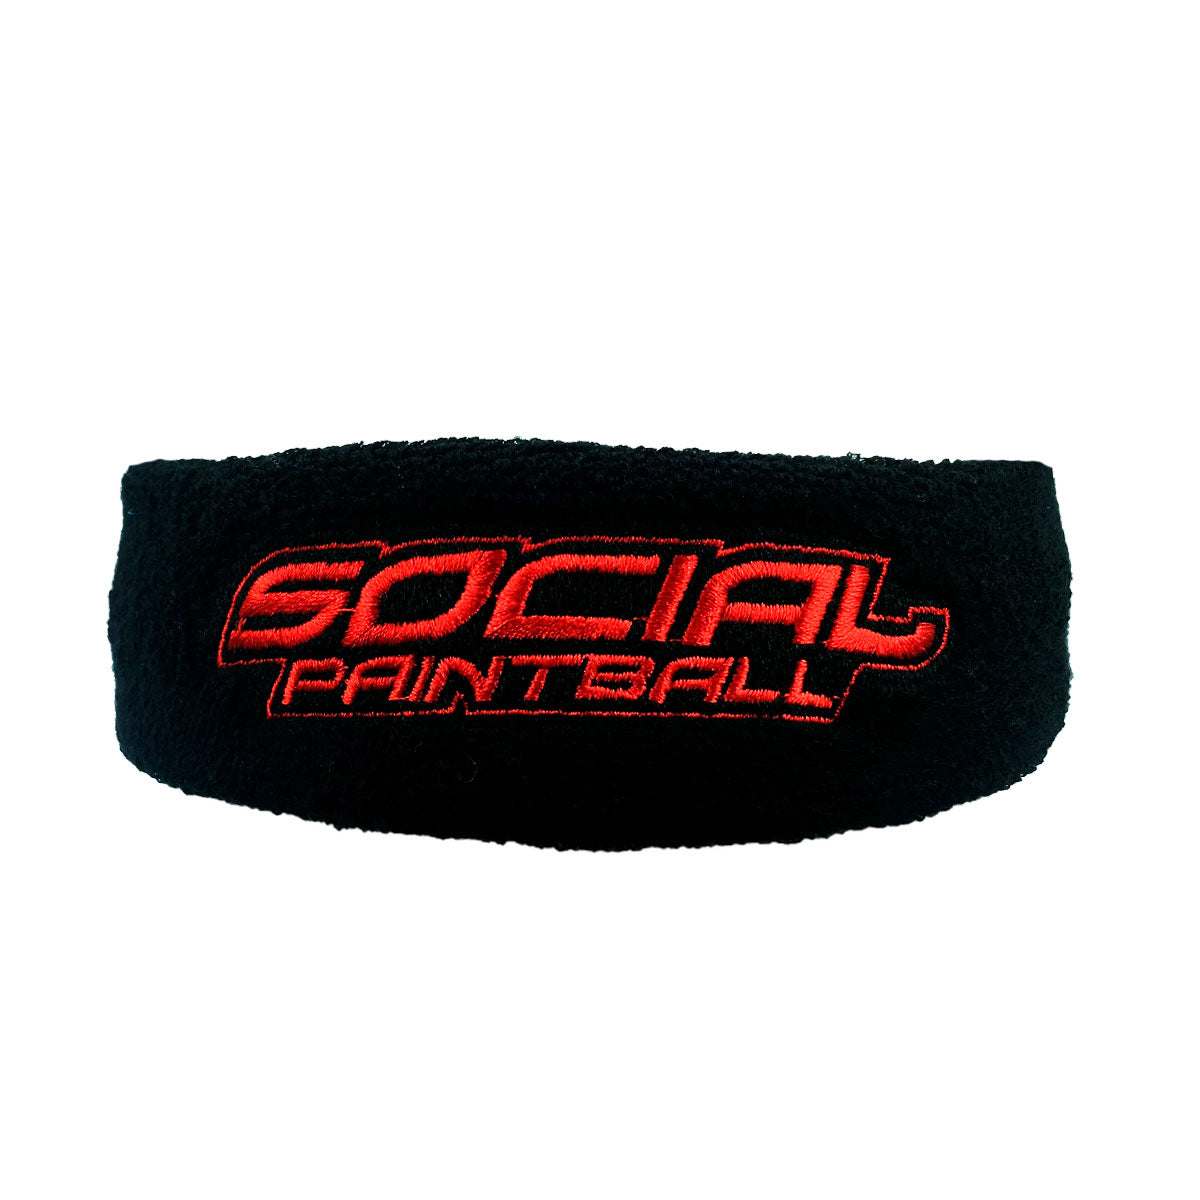 Sweatband, Black | Paintball Headband | Social Paintball